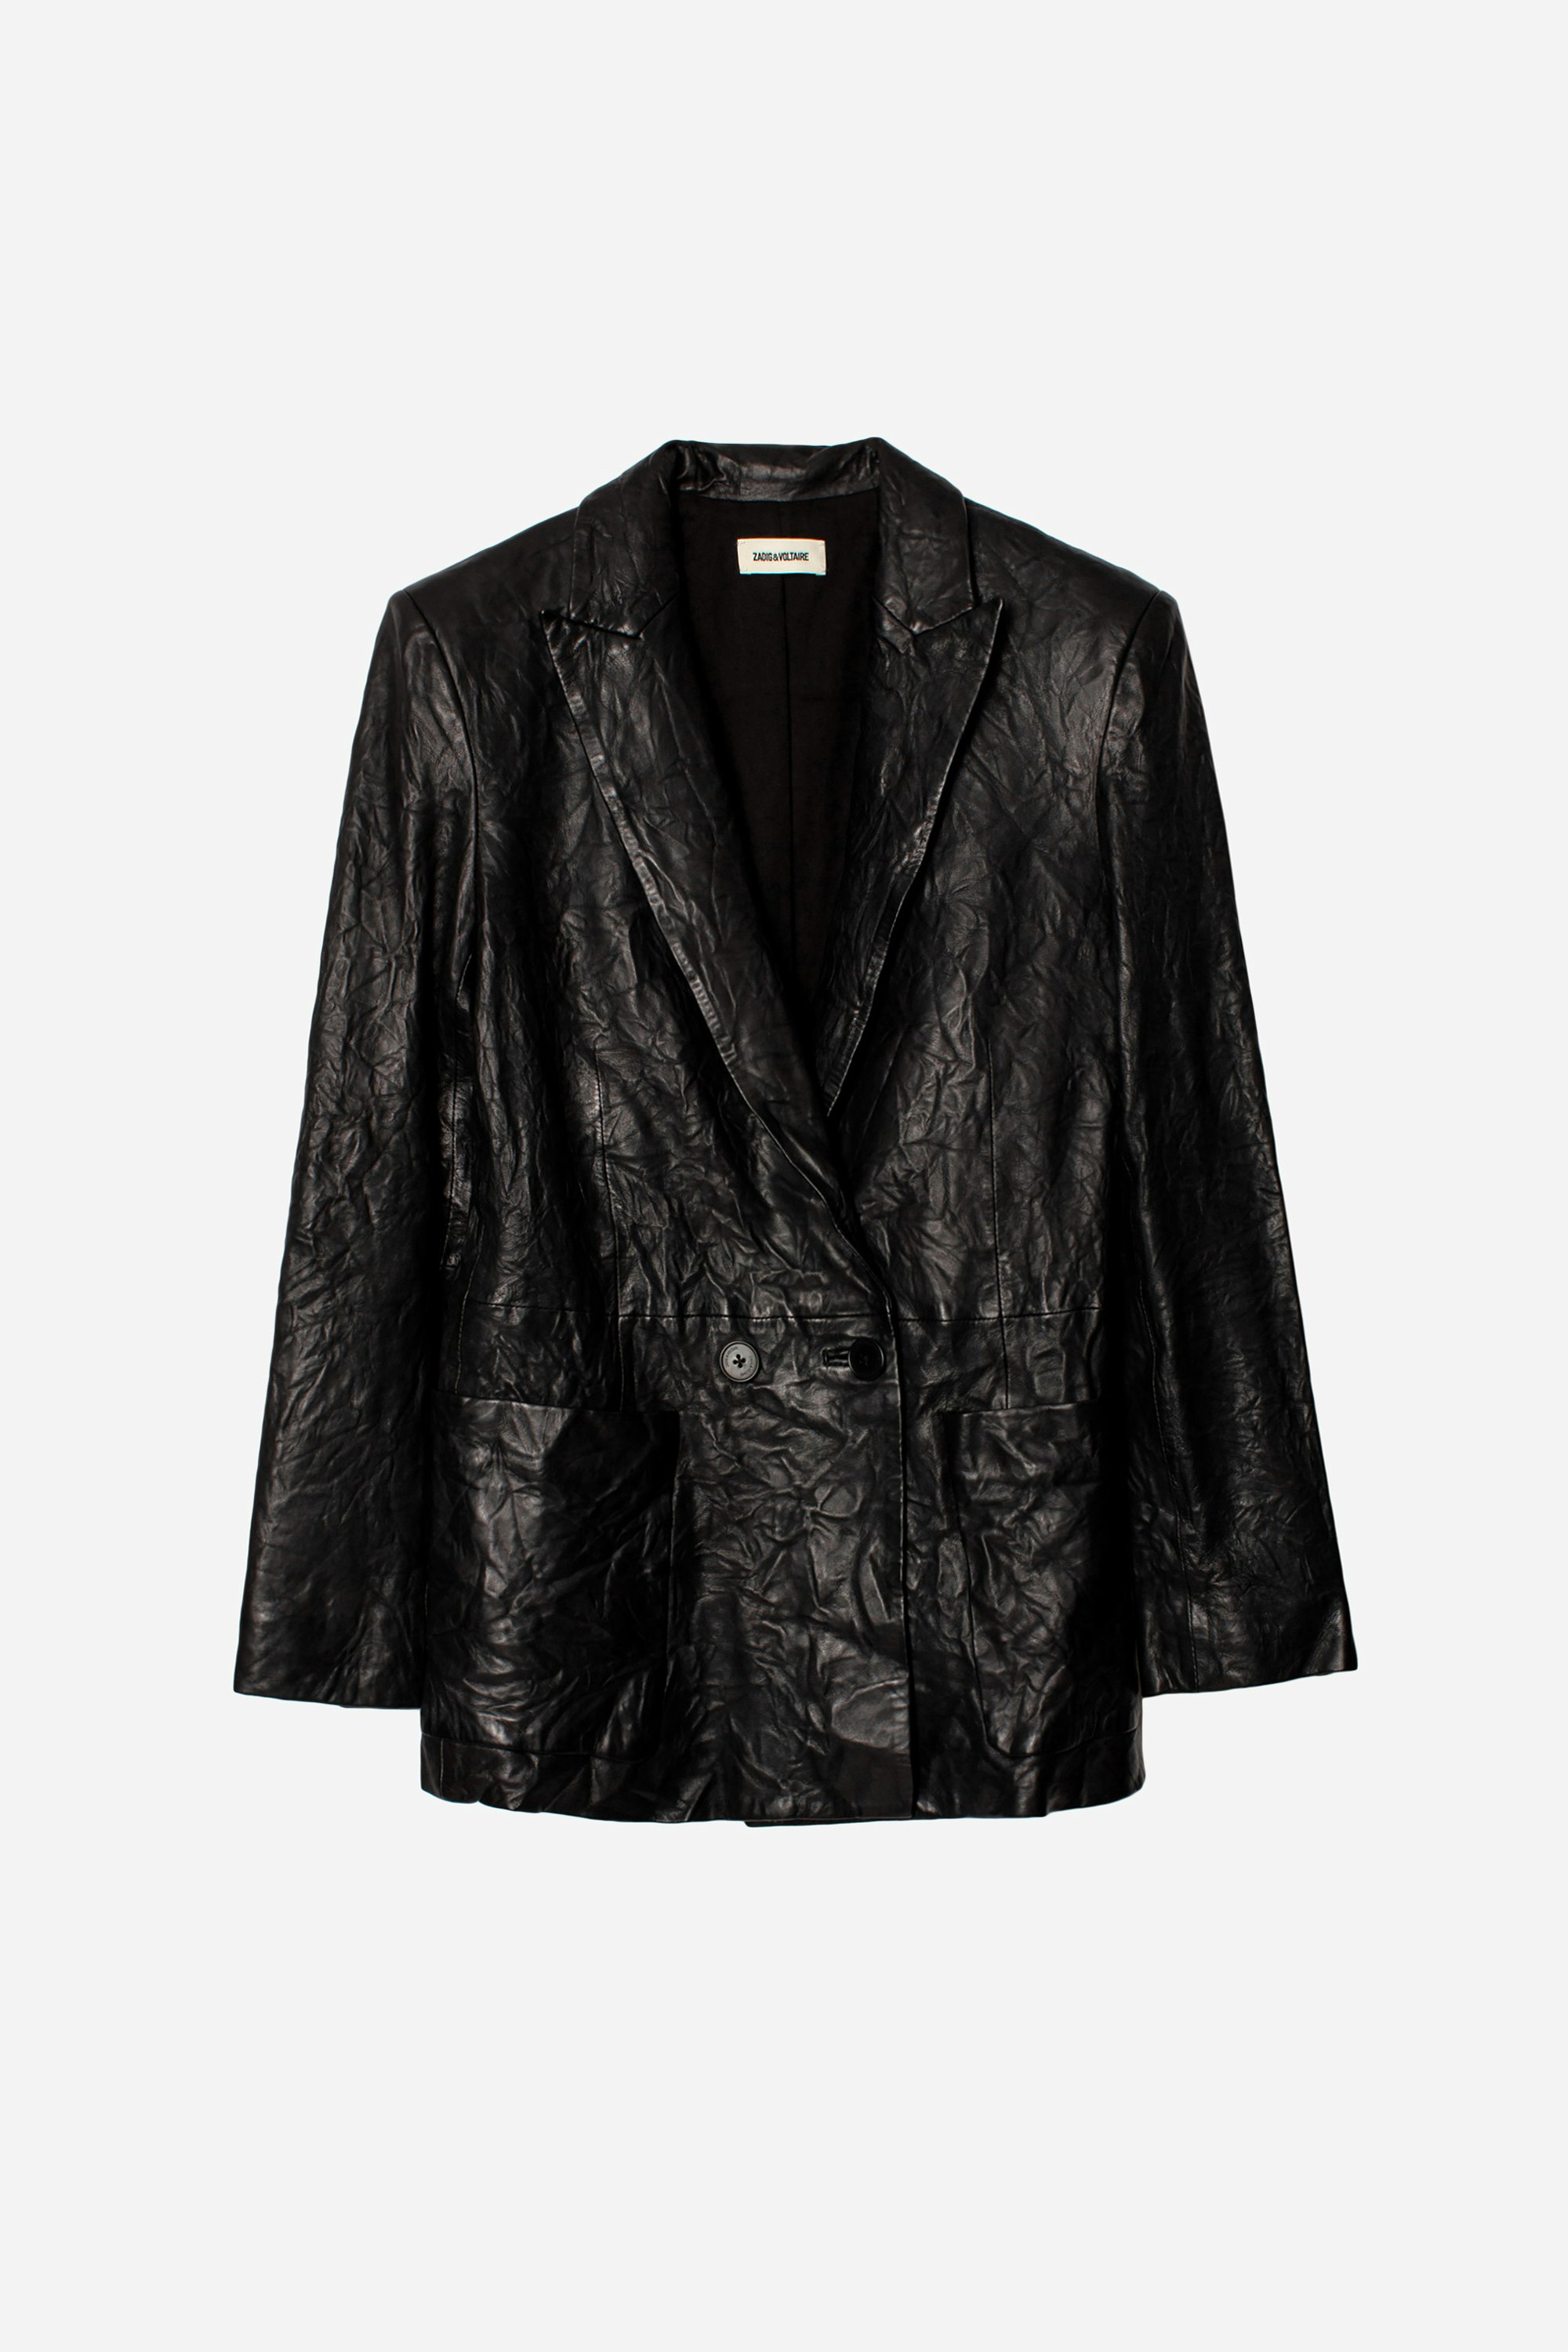 Visco Crinkle Leather Jacket Women's black crinkled-effect leather jacket.